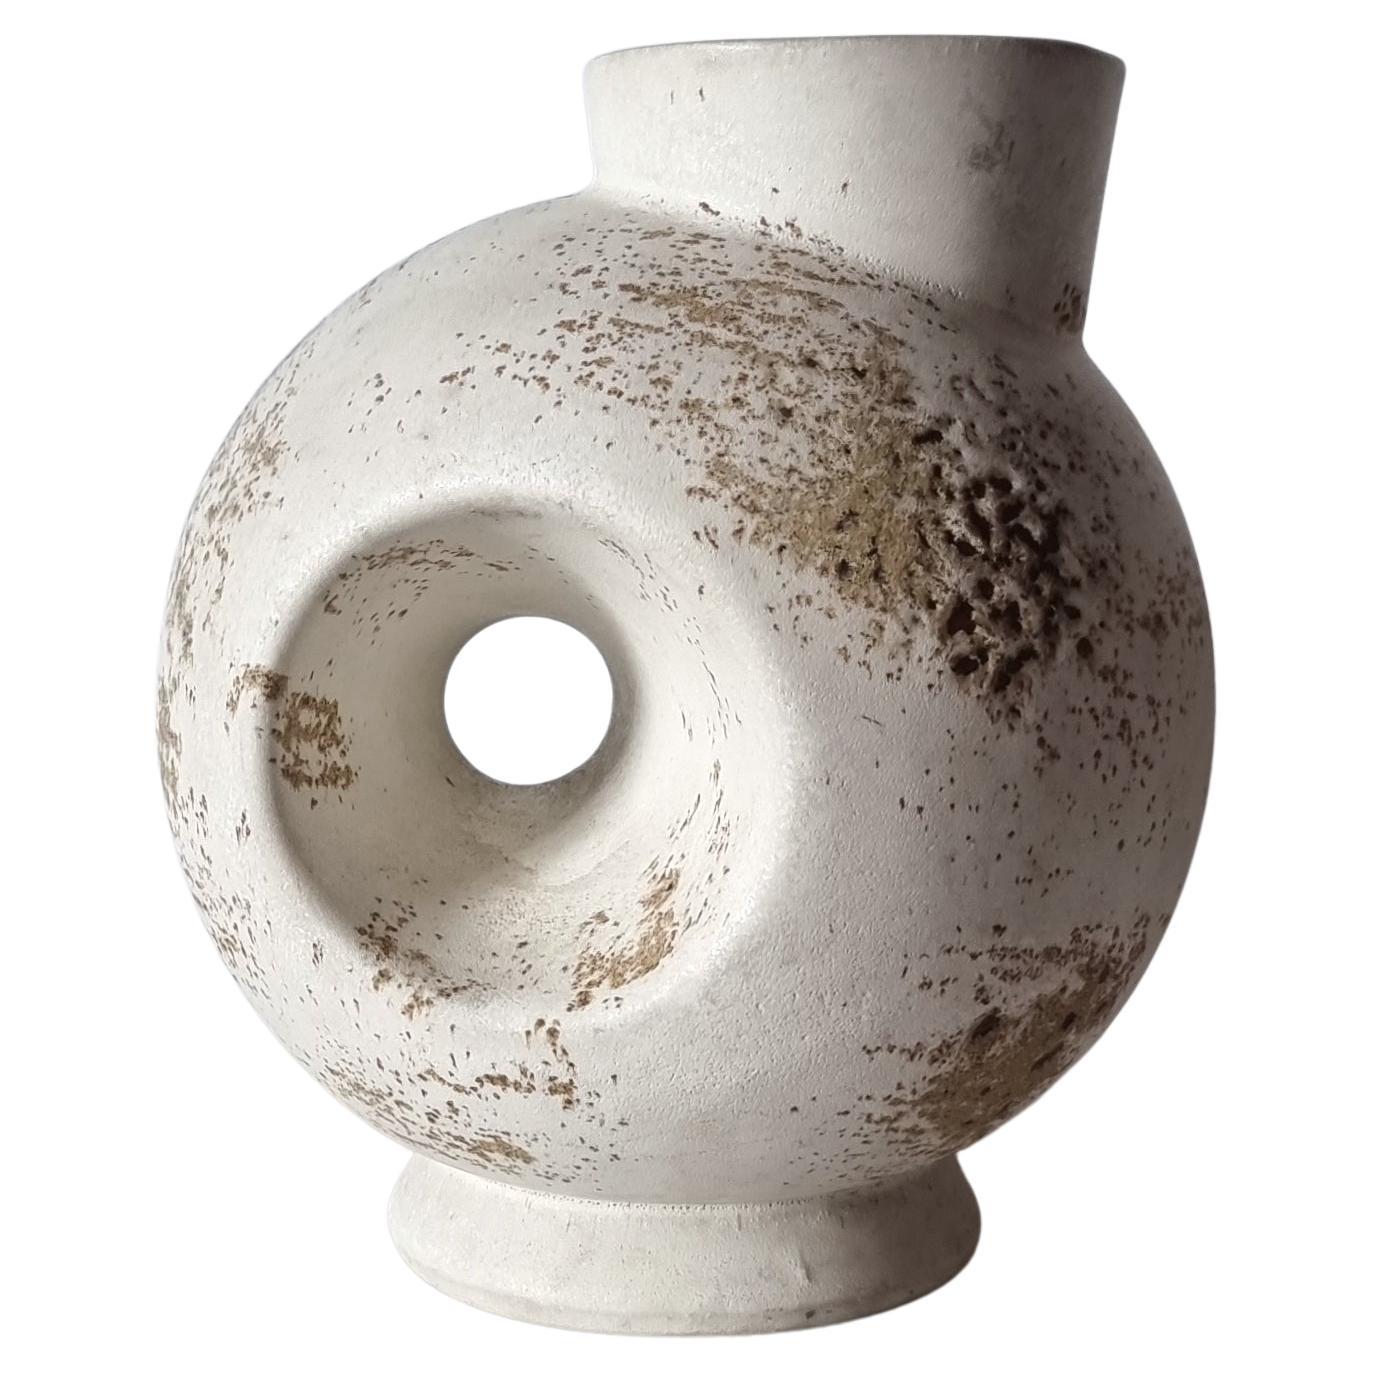 Duif Keramiek Sculptural Globe, Statement Jug Vase, Nutmeg Speckled Cream Glaze